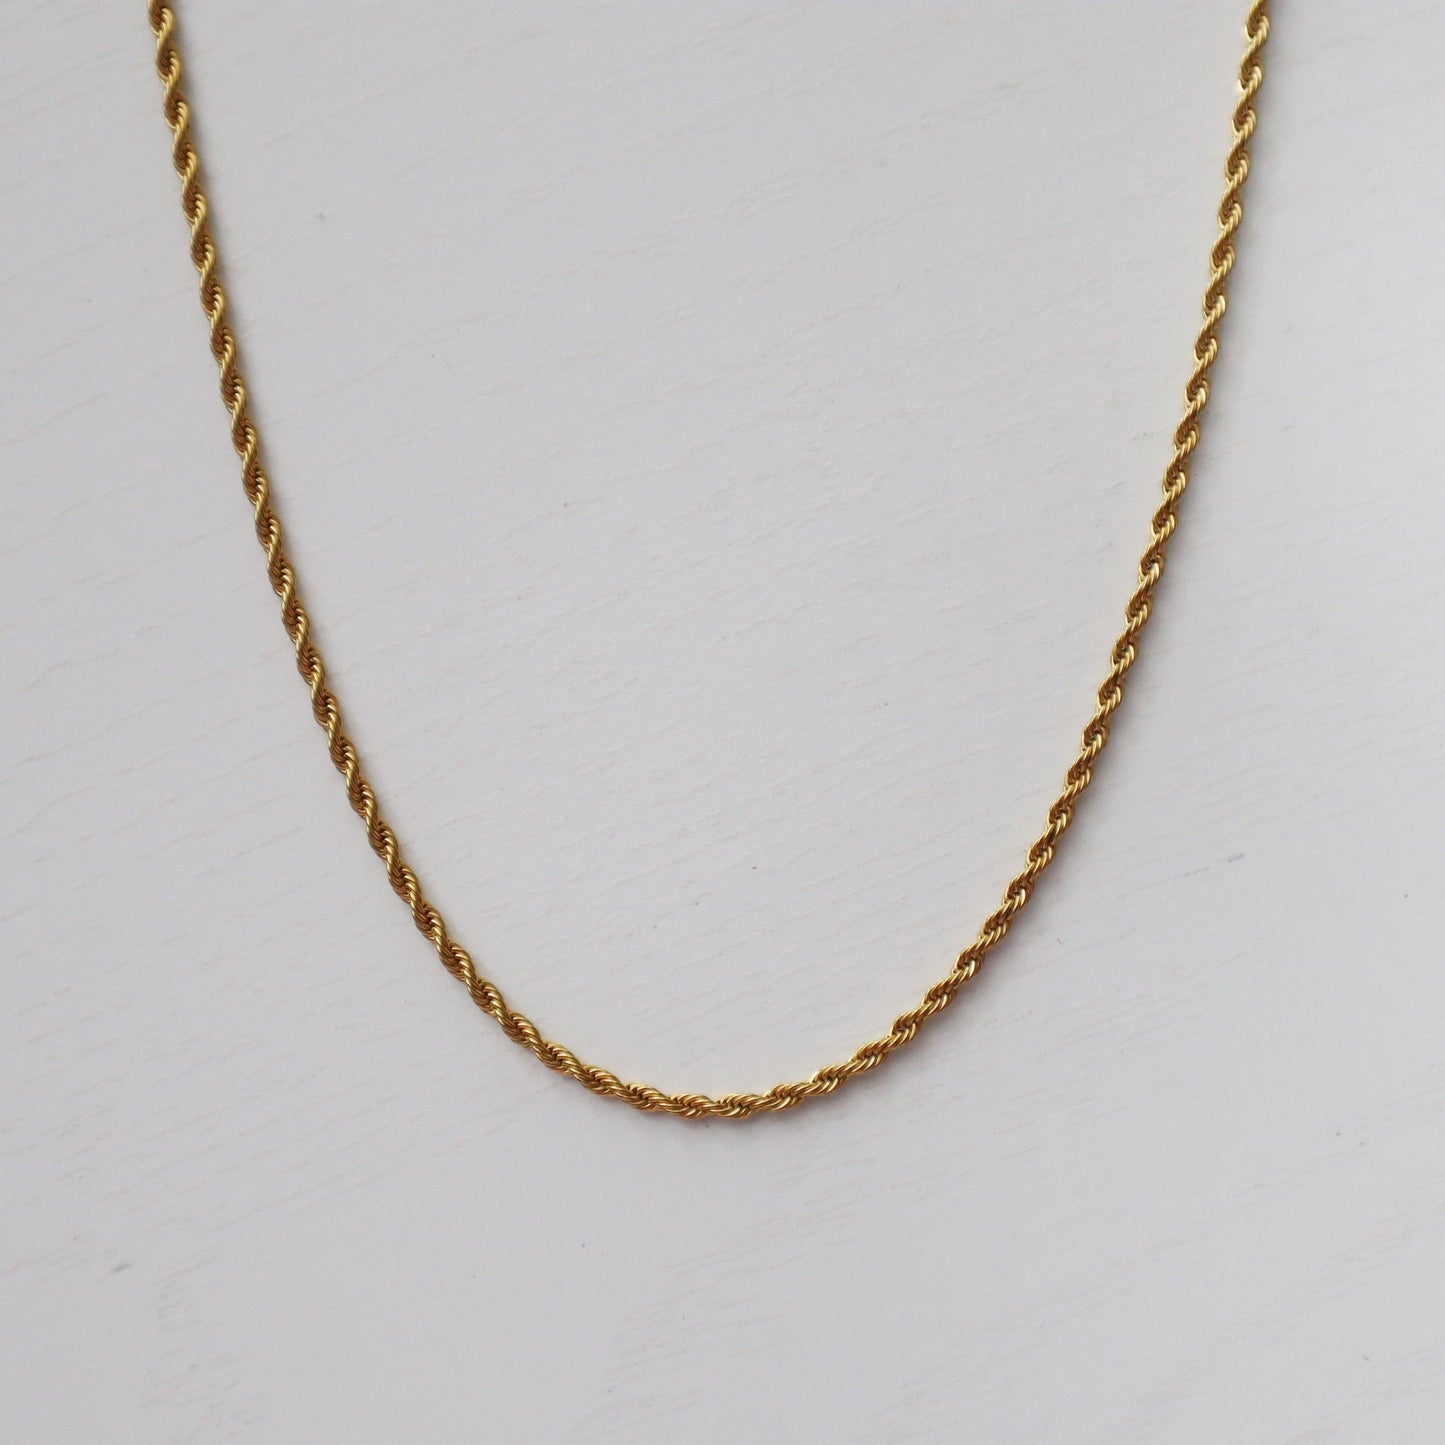 Mini Rope Chain | Everyday Chain - JESSA JEWELRY | GOLD JEWELRY; dainty, affordable gold everyday jewelry. Tarnish free, water-resistant, hypoallergenic. Jewelry for everyday wear